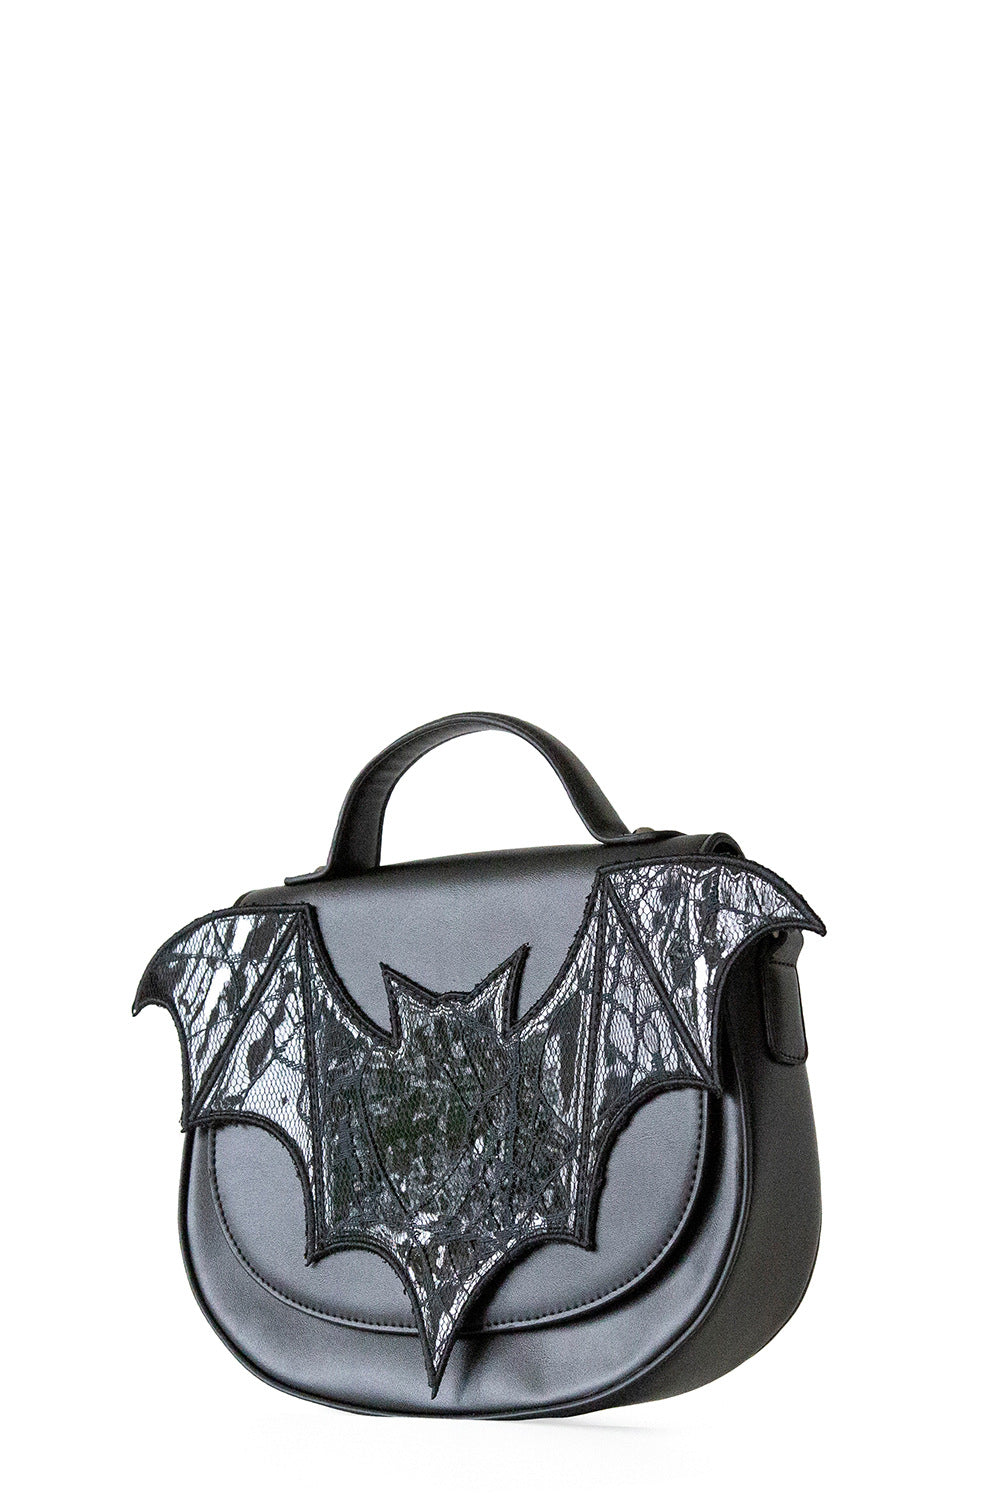 Bat print side body handbag